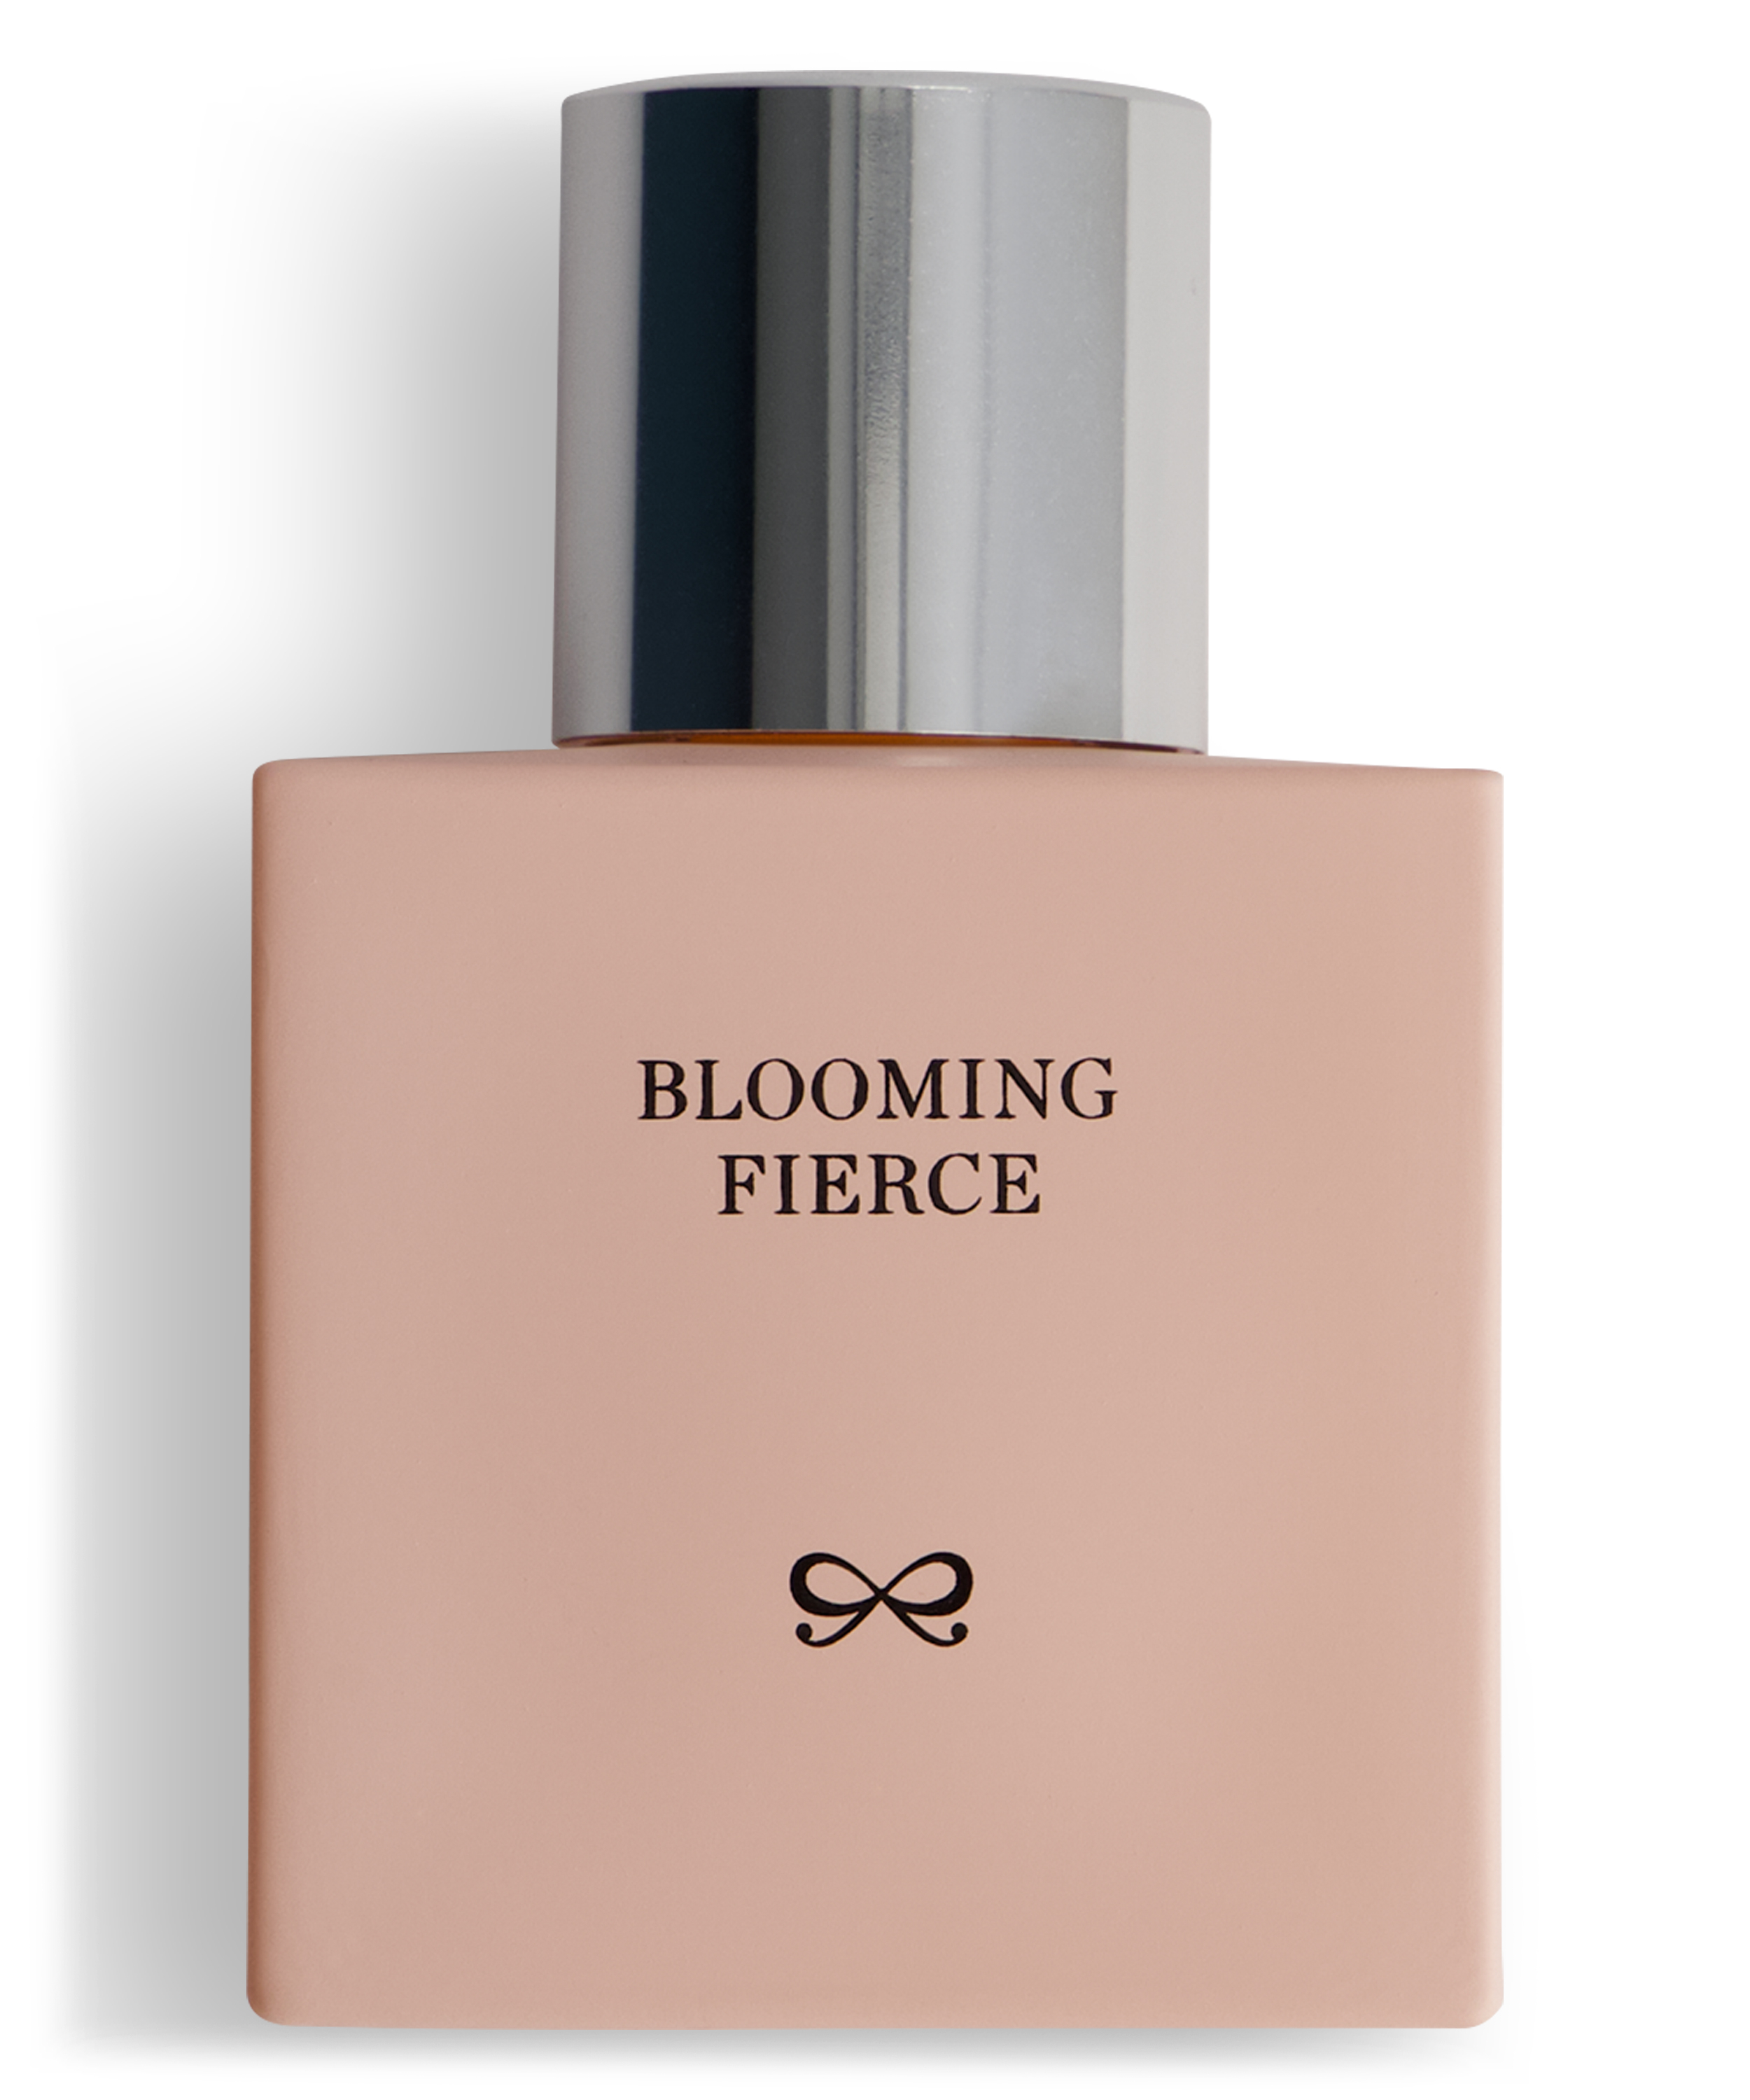 Eau de Parfum Blooming Fierce 50 ml, Blanc, main